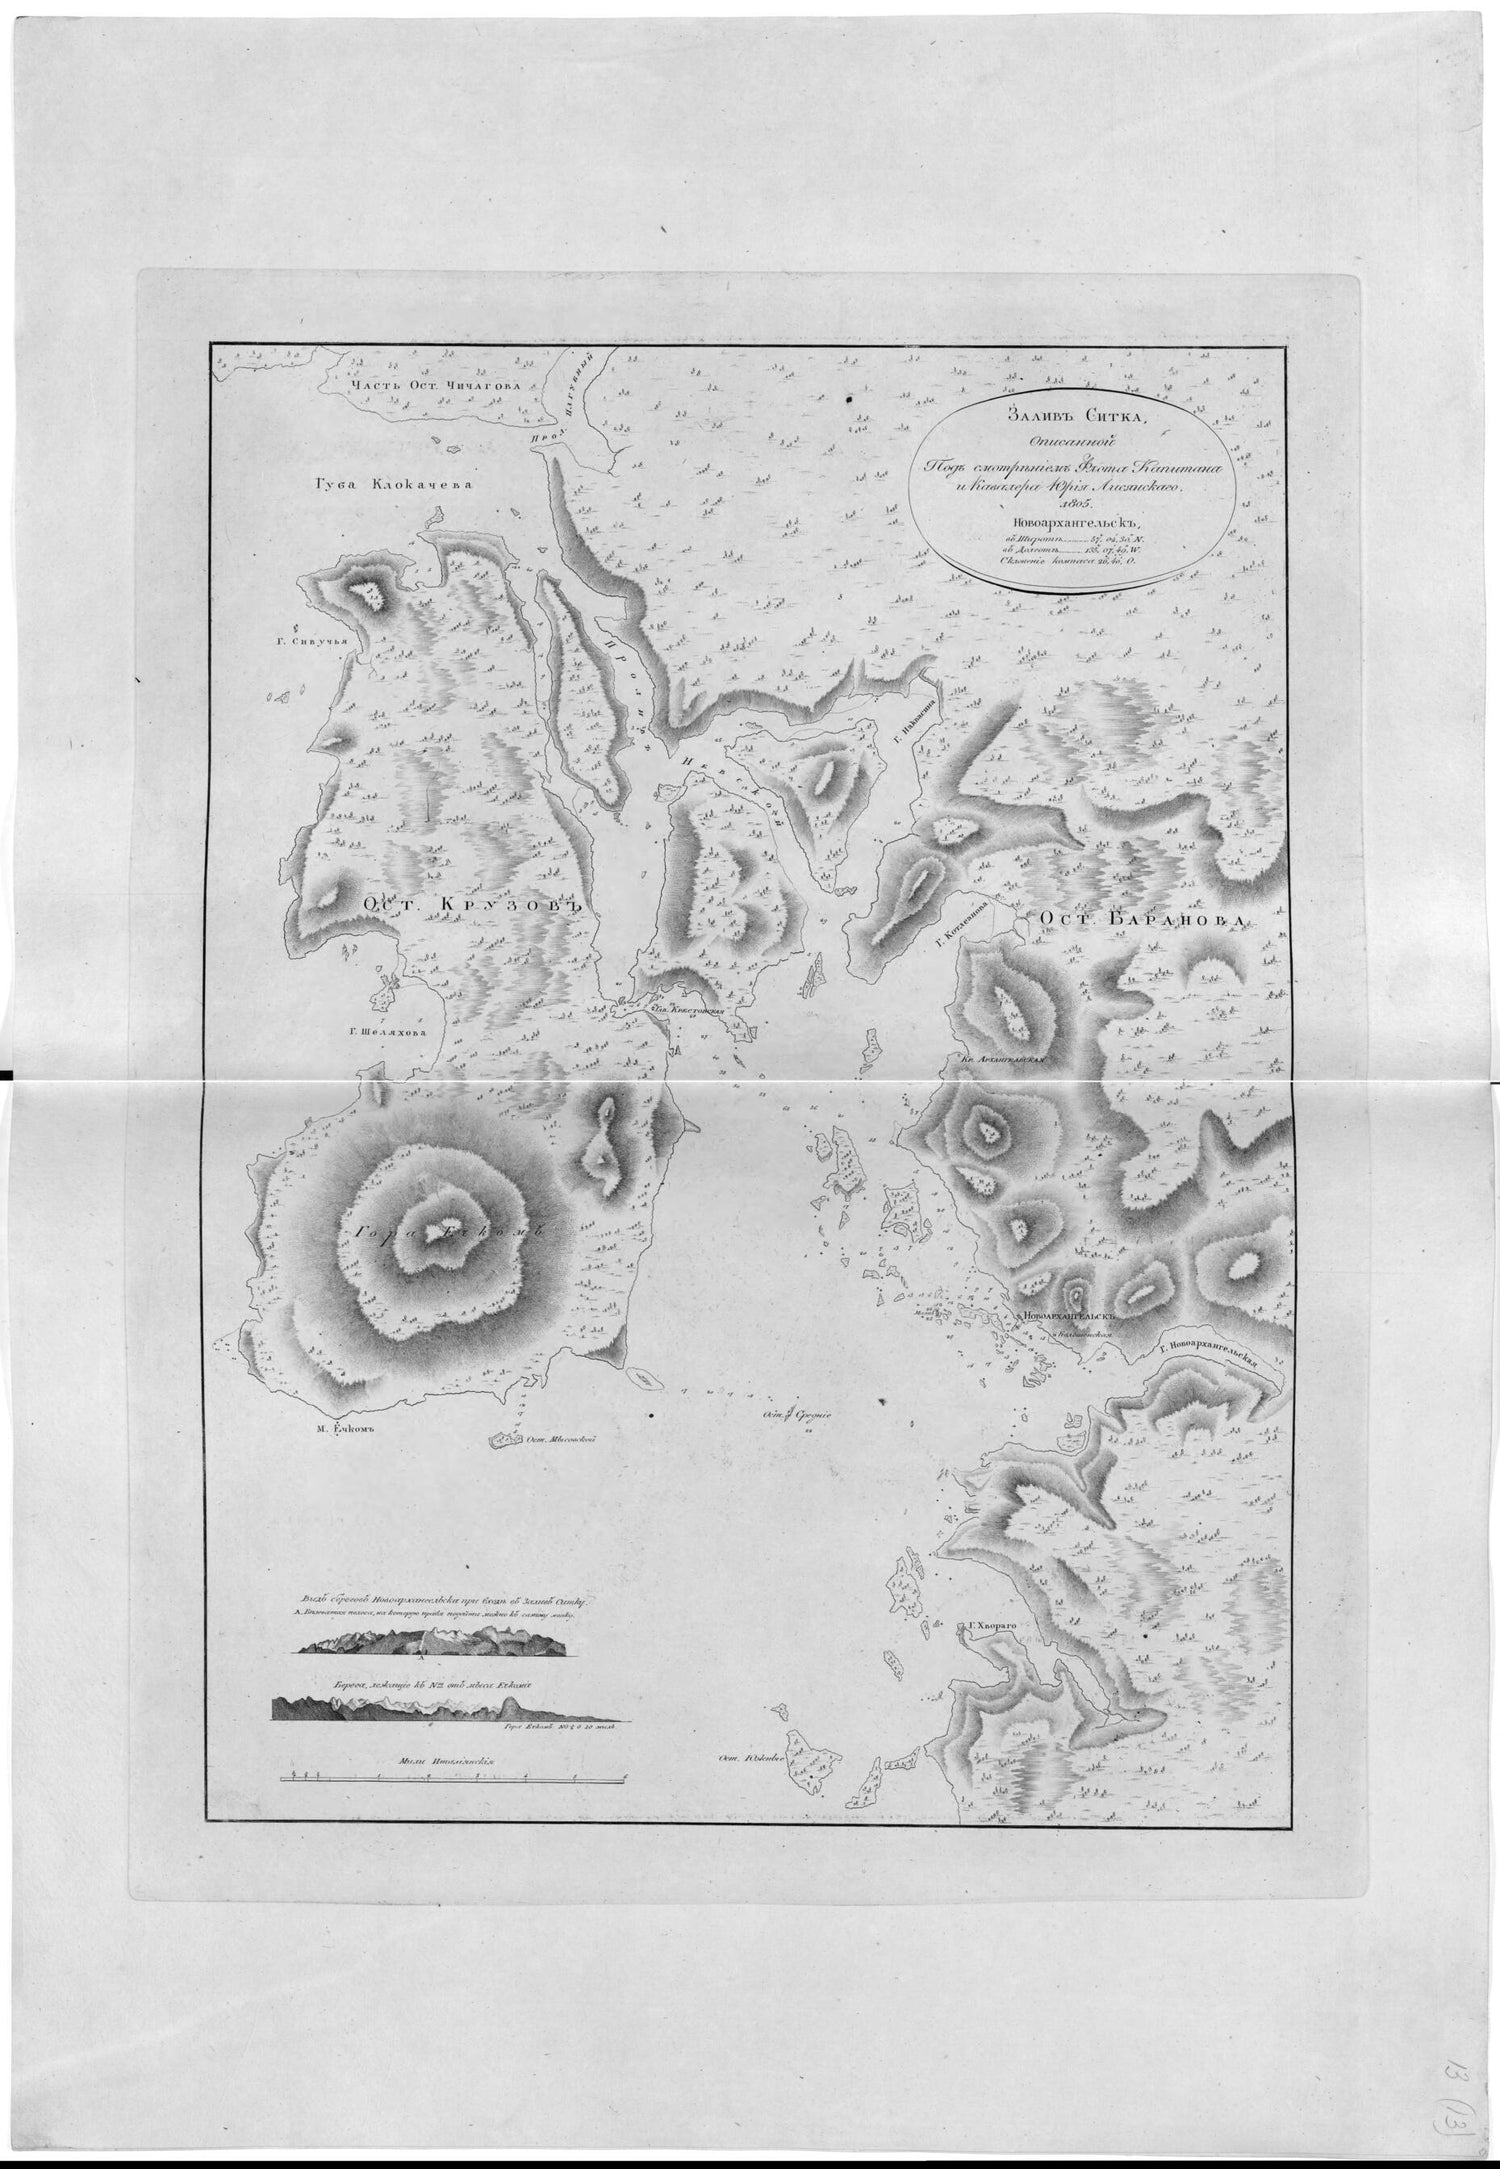 This old map of Zaliv Sitka, Opisannyĭ Pod Smotreniem Flota Kapitana I Kavalera I︠U︡rii︠a︡ Lisi︠a︡nskogo. 1805. (Залив Ситка, описанный под смотрением флота капитана и кавалера Юрия �